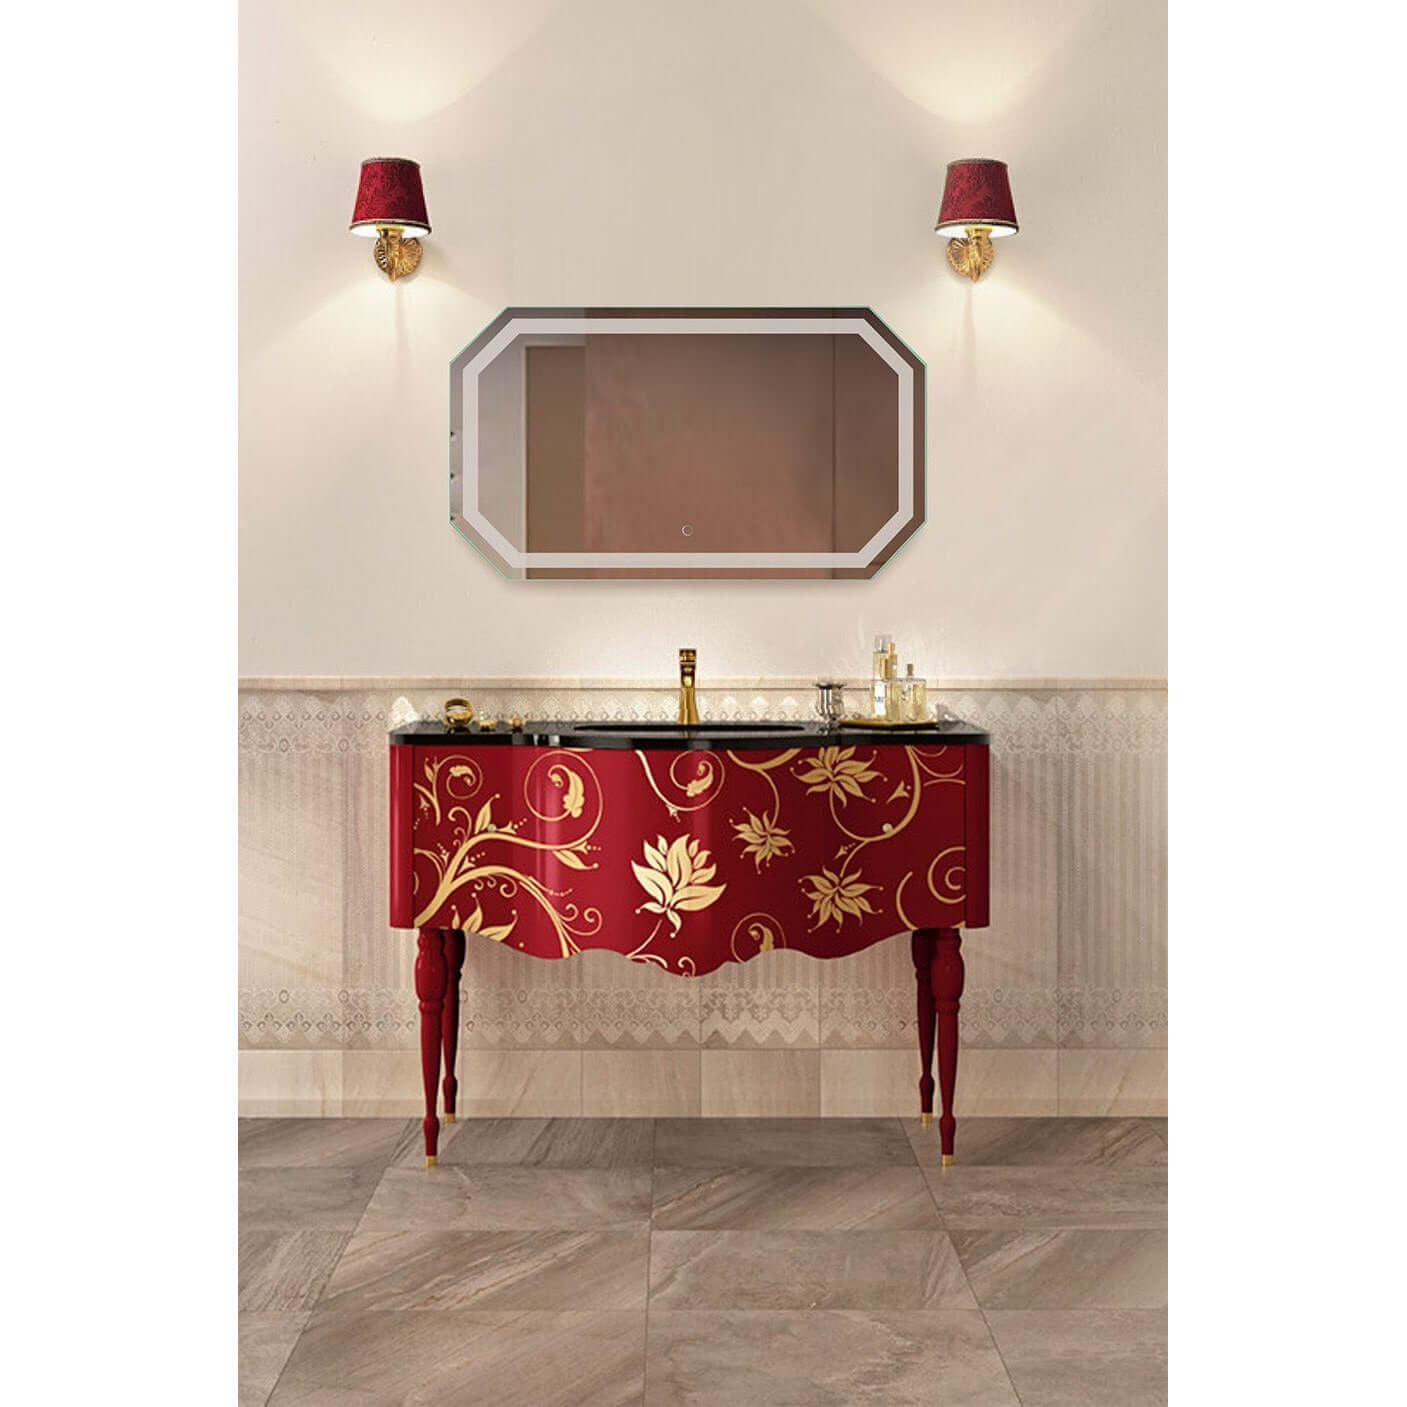 Lighted Bathroom Mirror - Krugg Tudor LED - TUDOR6030